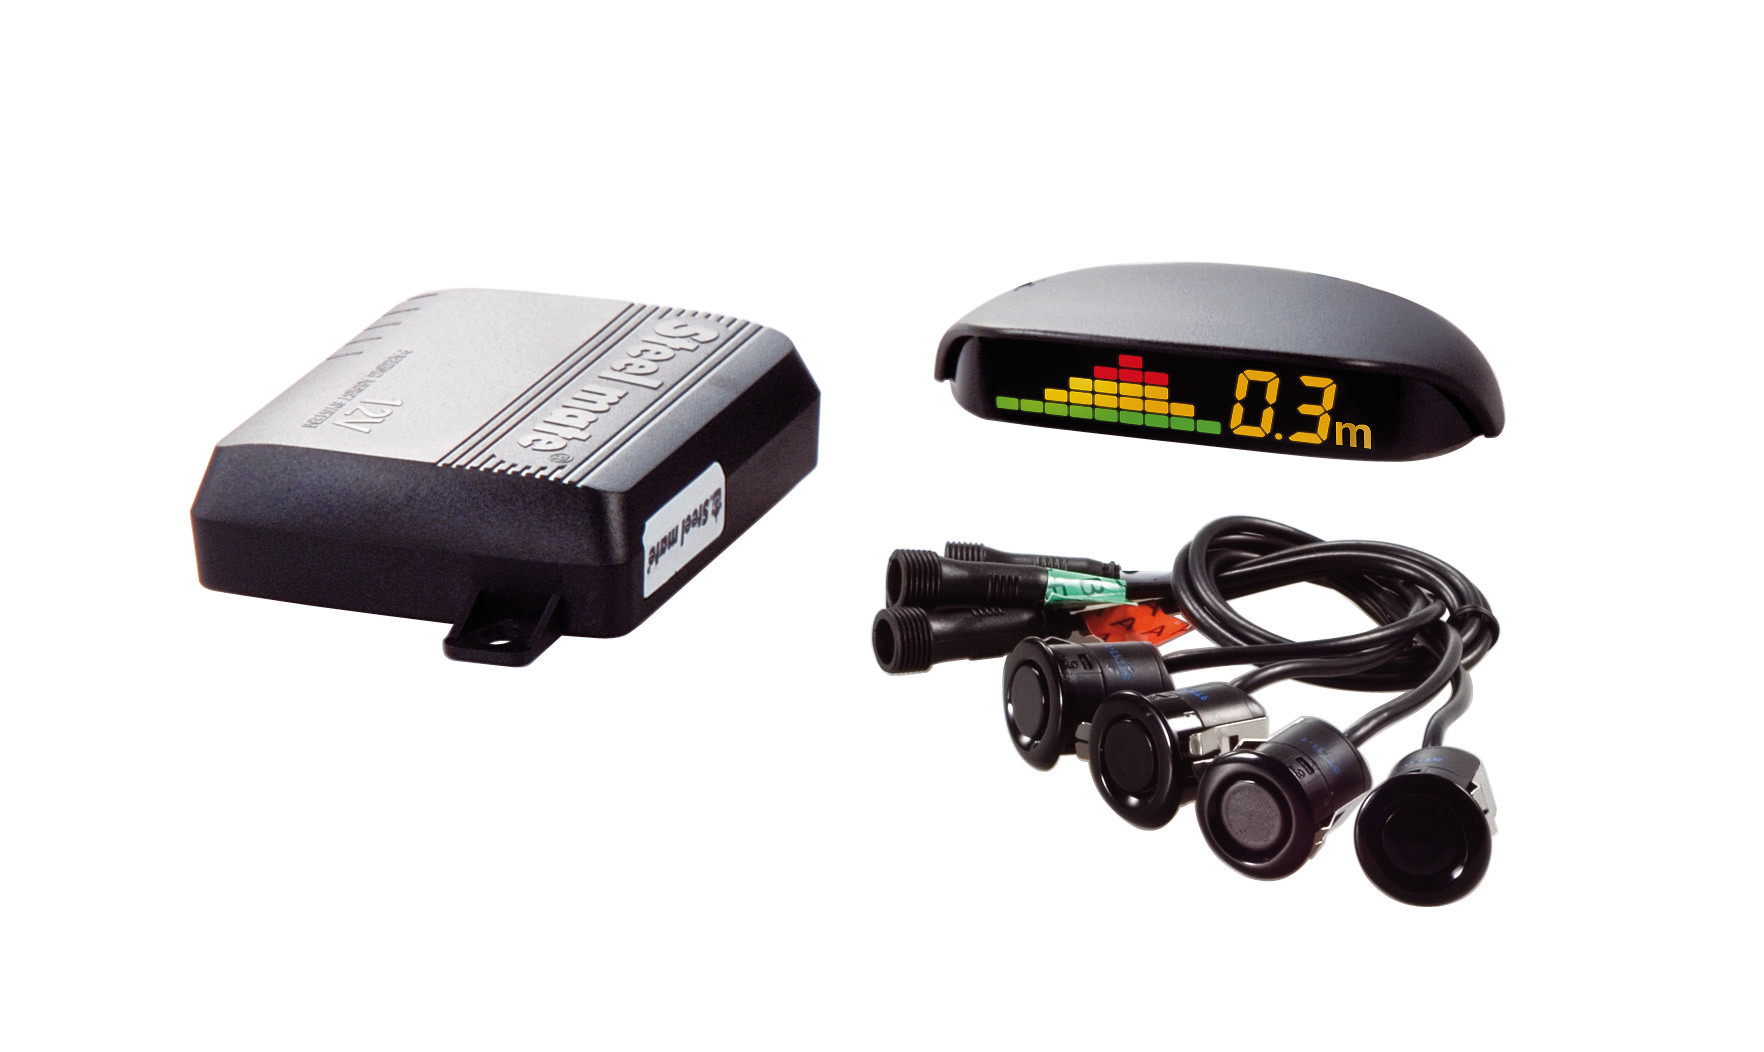 PTS400Q4, 4 parking sensors with wireless display, 12V thumb